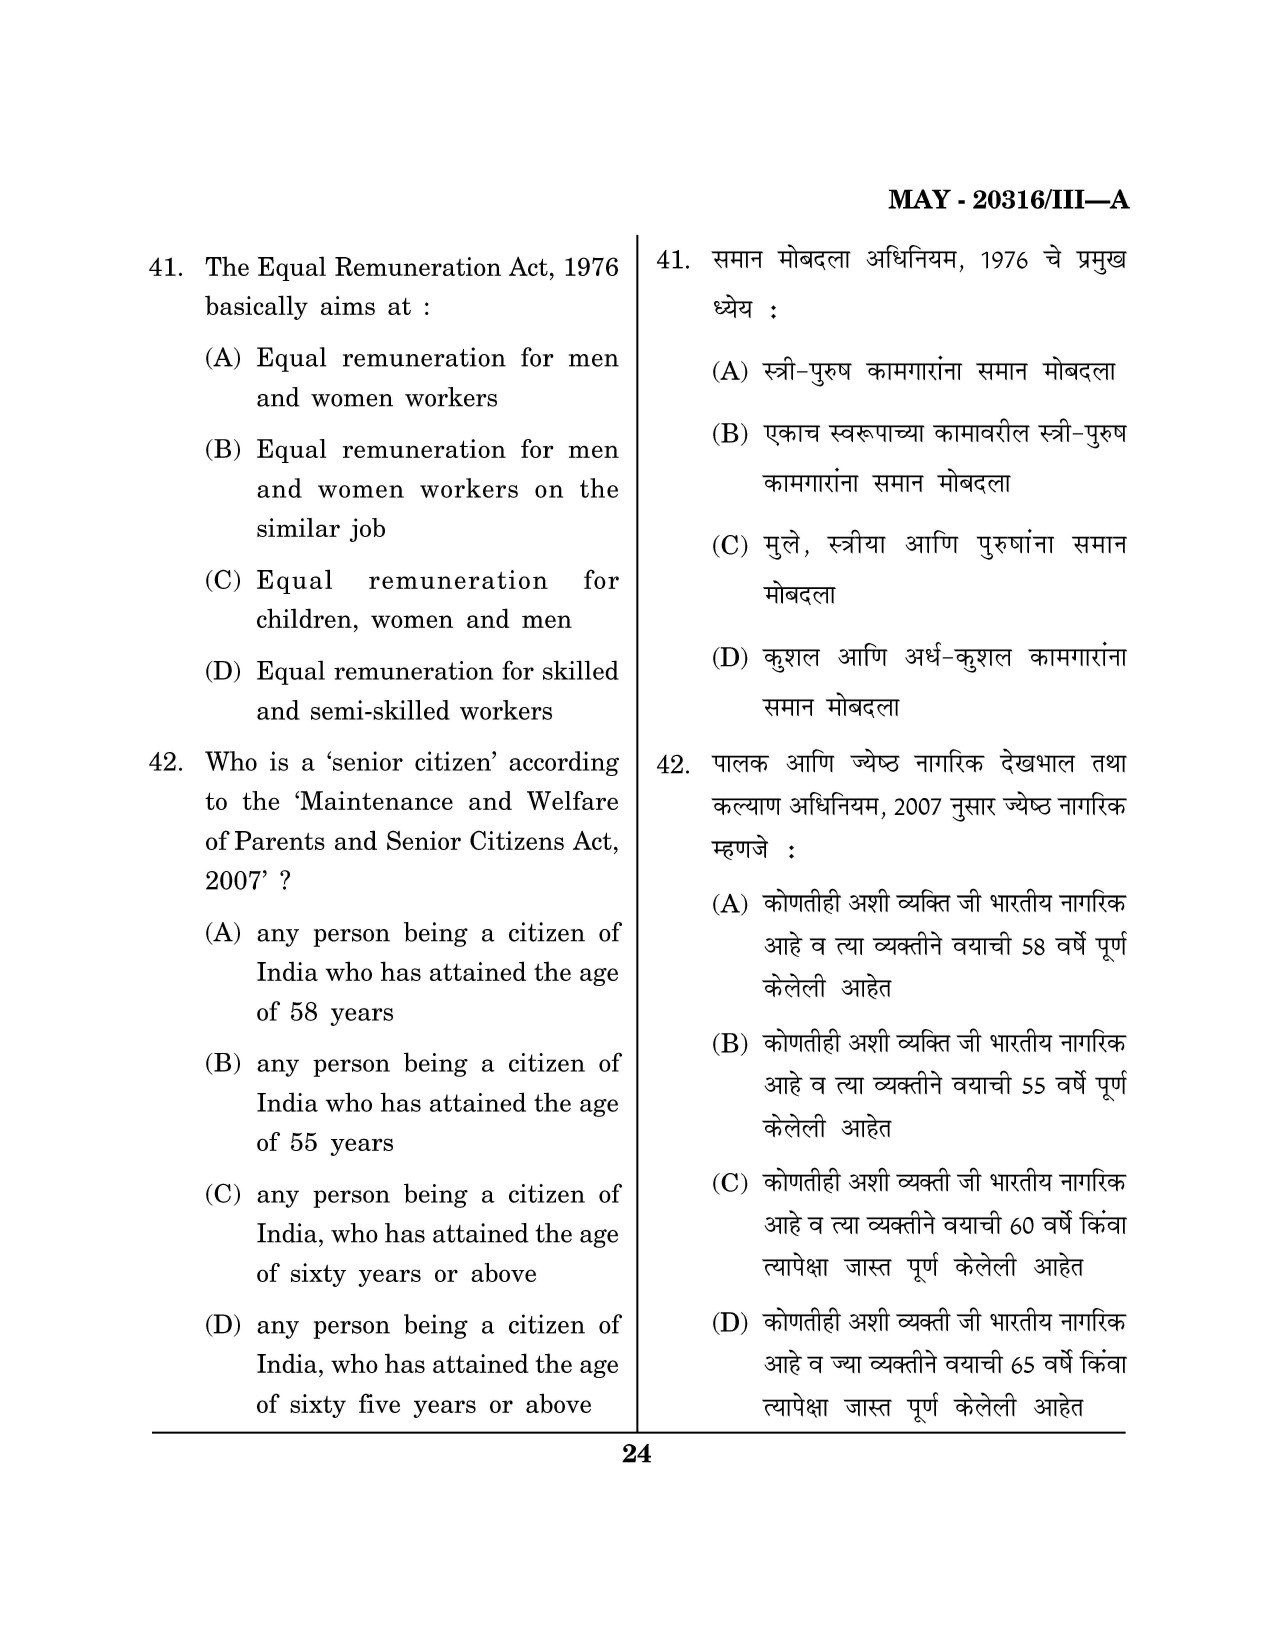 Maharashtra SET Social Work Question Paper III May 2016 23